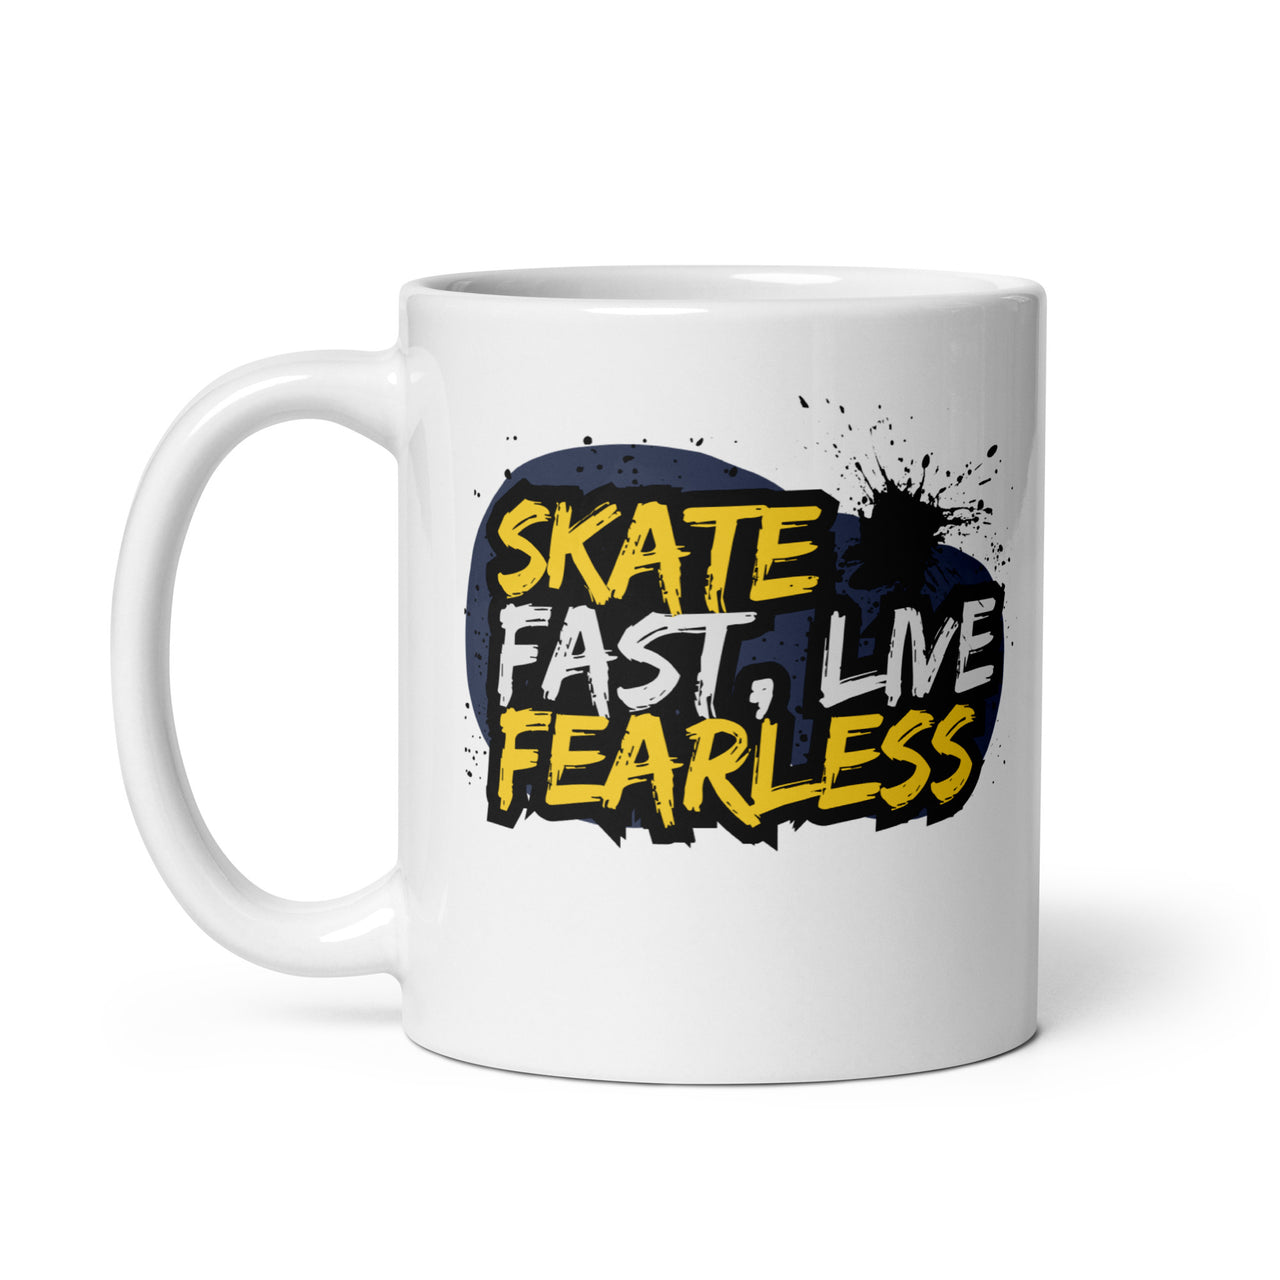 Skate Fast, Live Fearless: Street Art White Mug